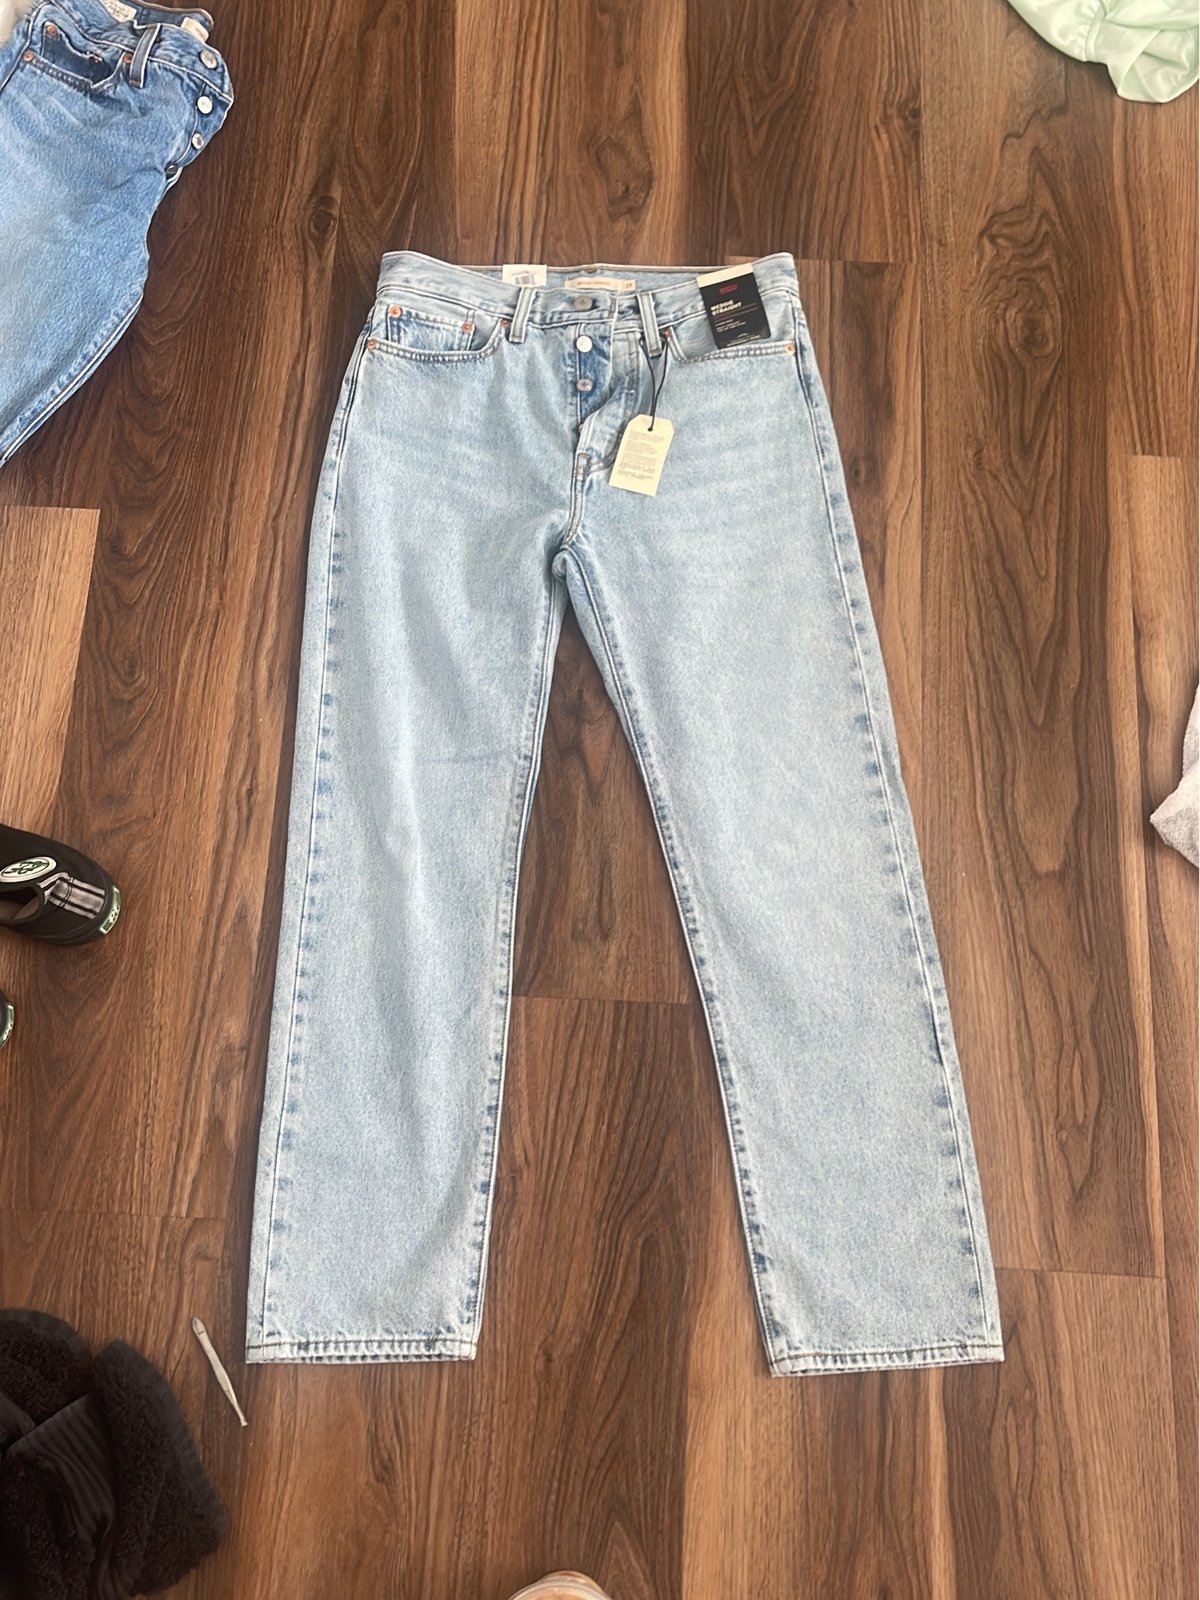 Exclusive Levis Jeans Size 27 jbysxffp5 just buy it